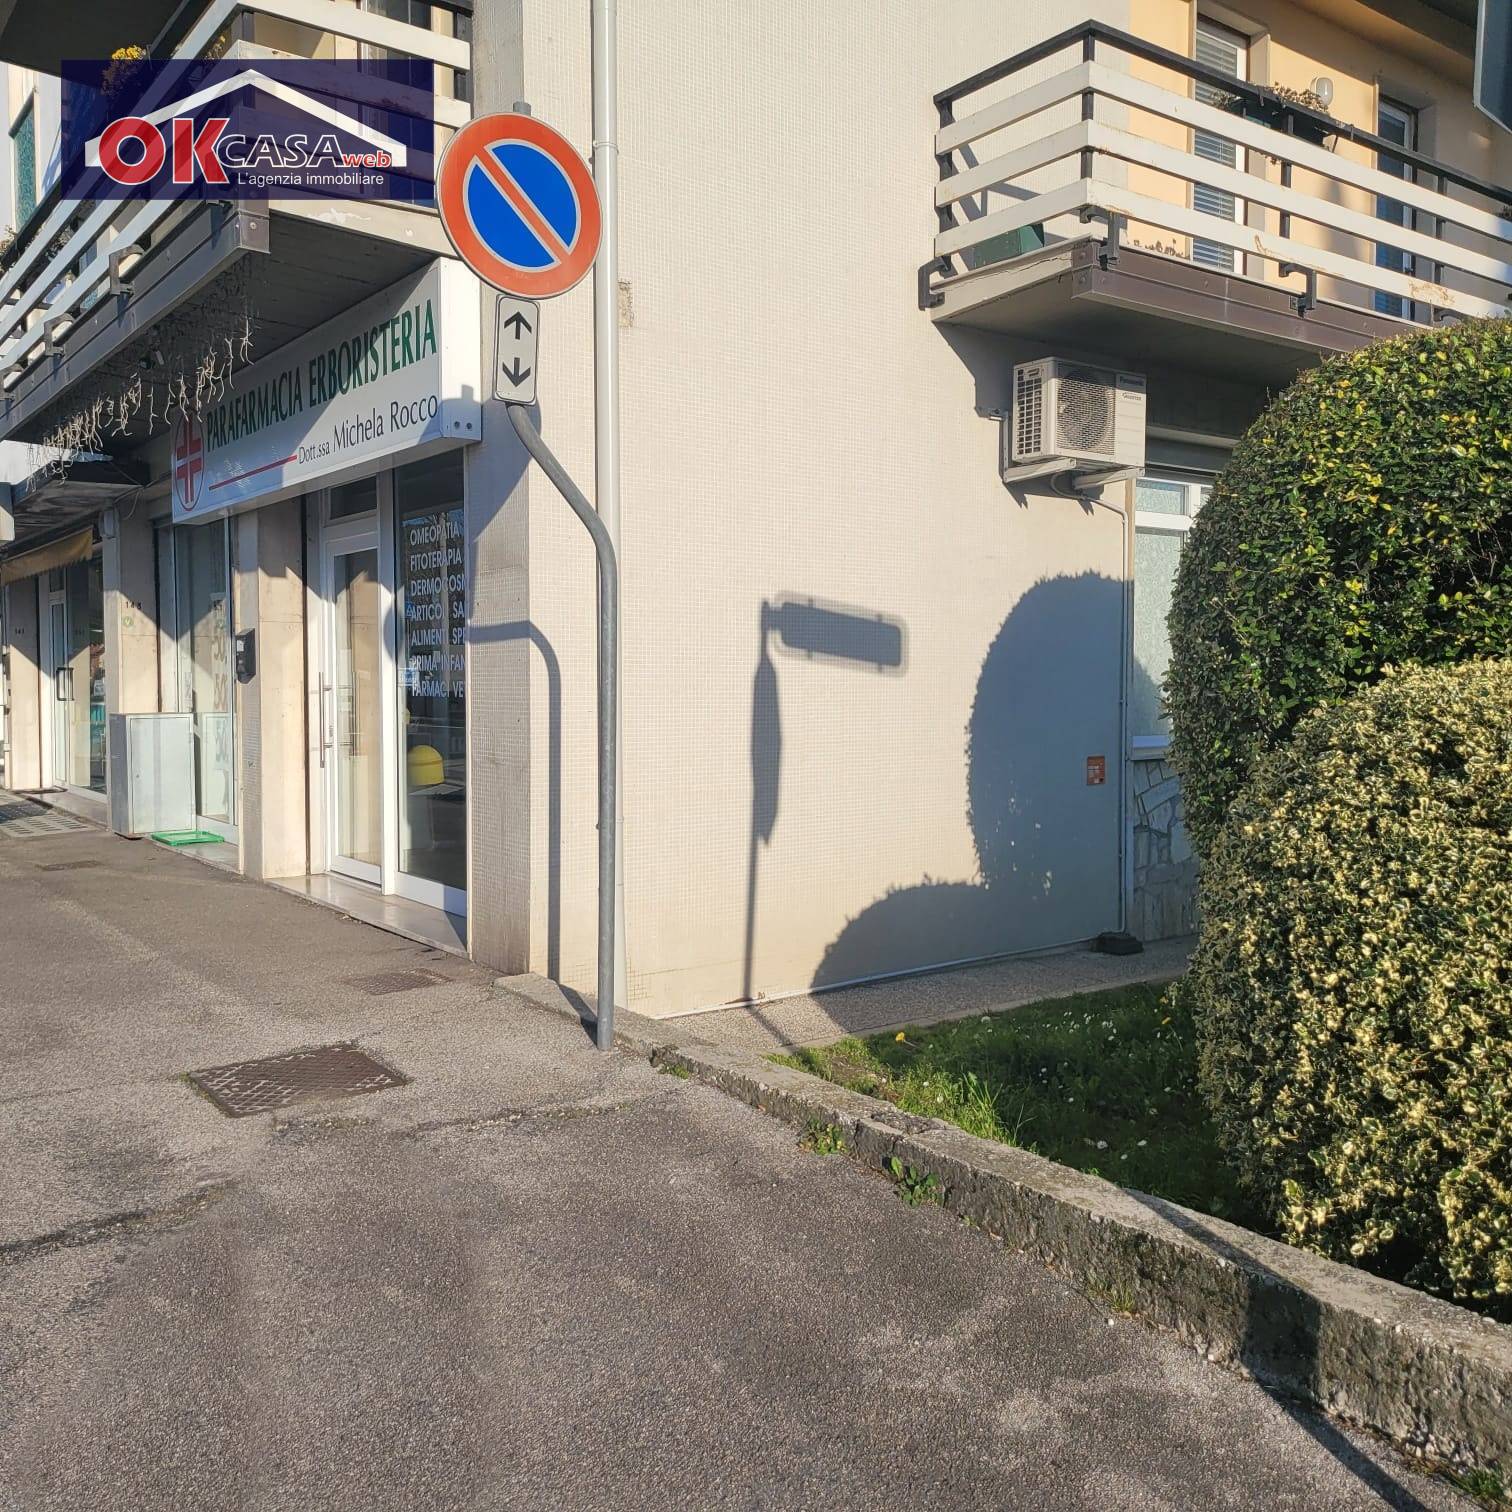 Locale commerciale | Gorizia, Gradisca d'Isonzo, viale trieste